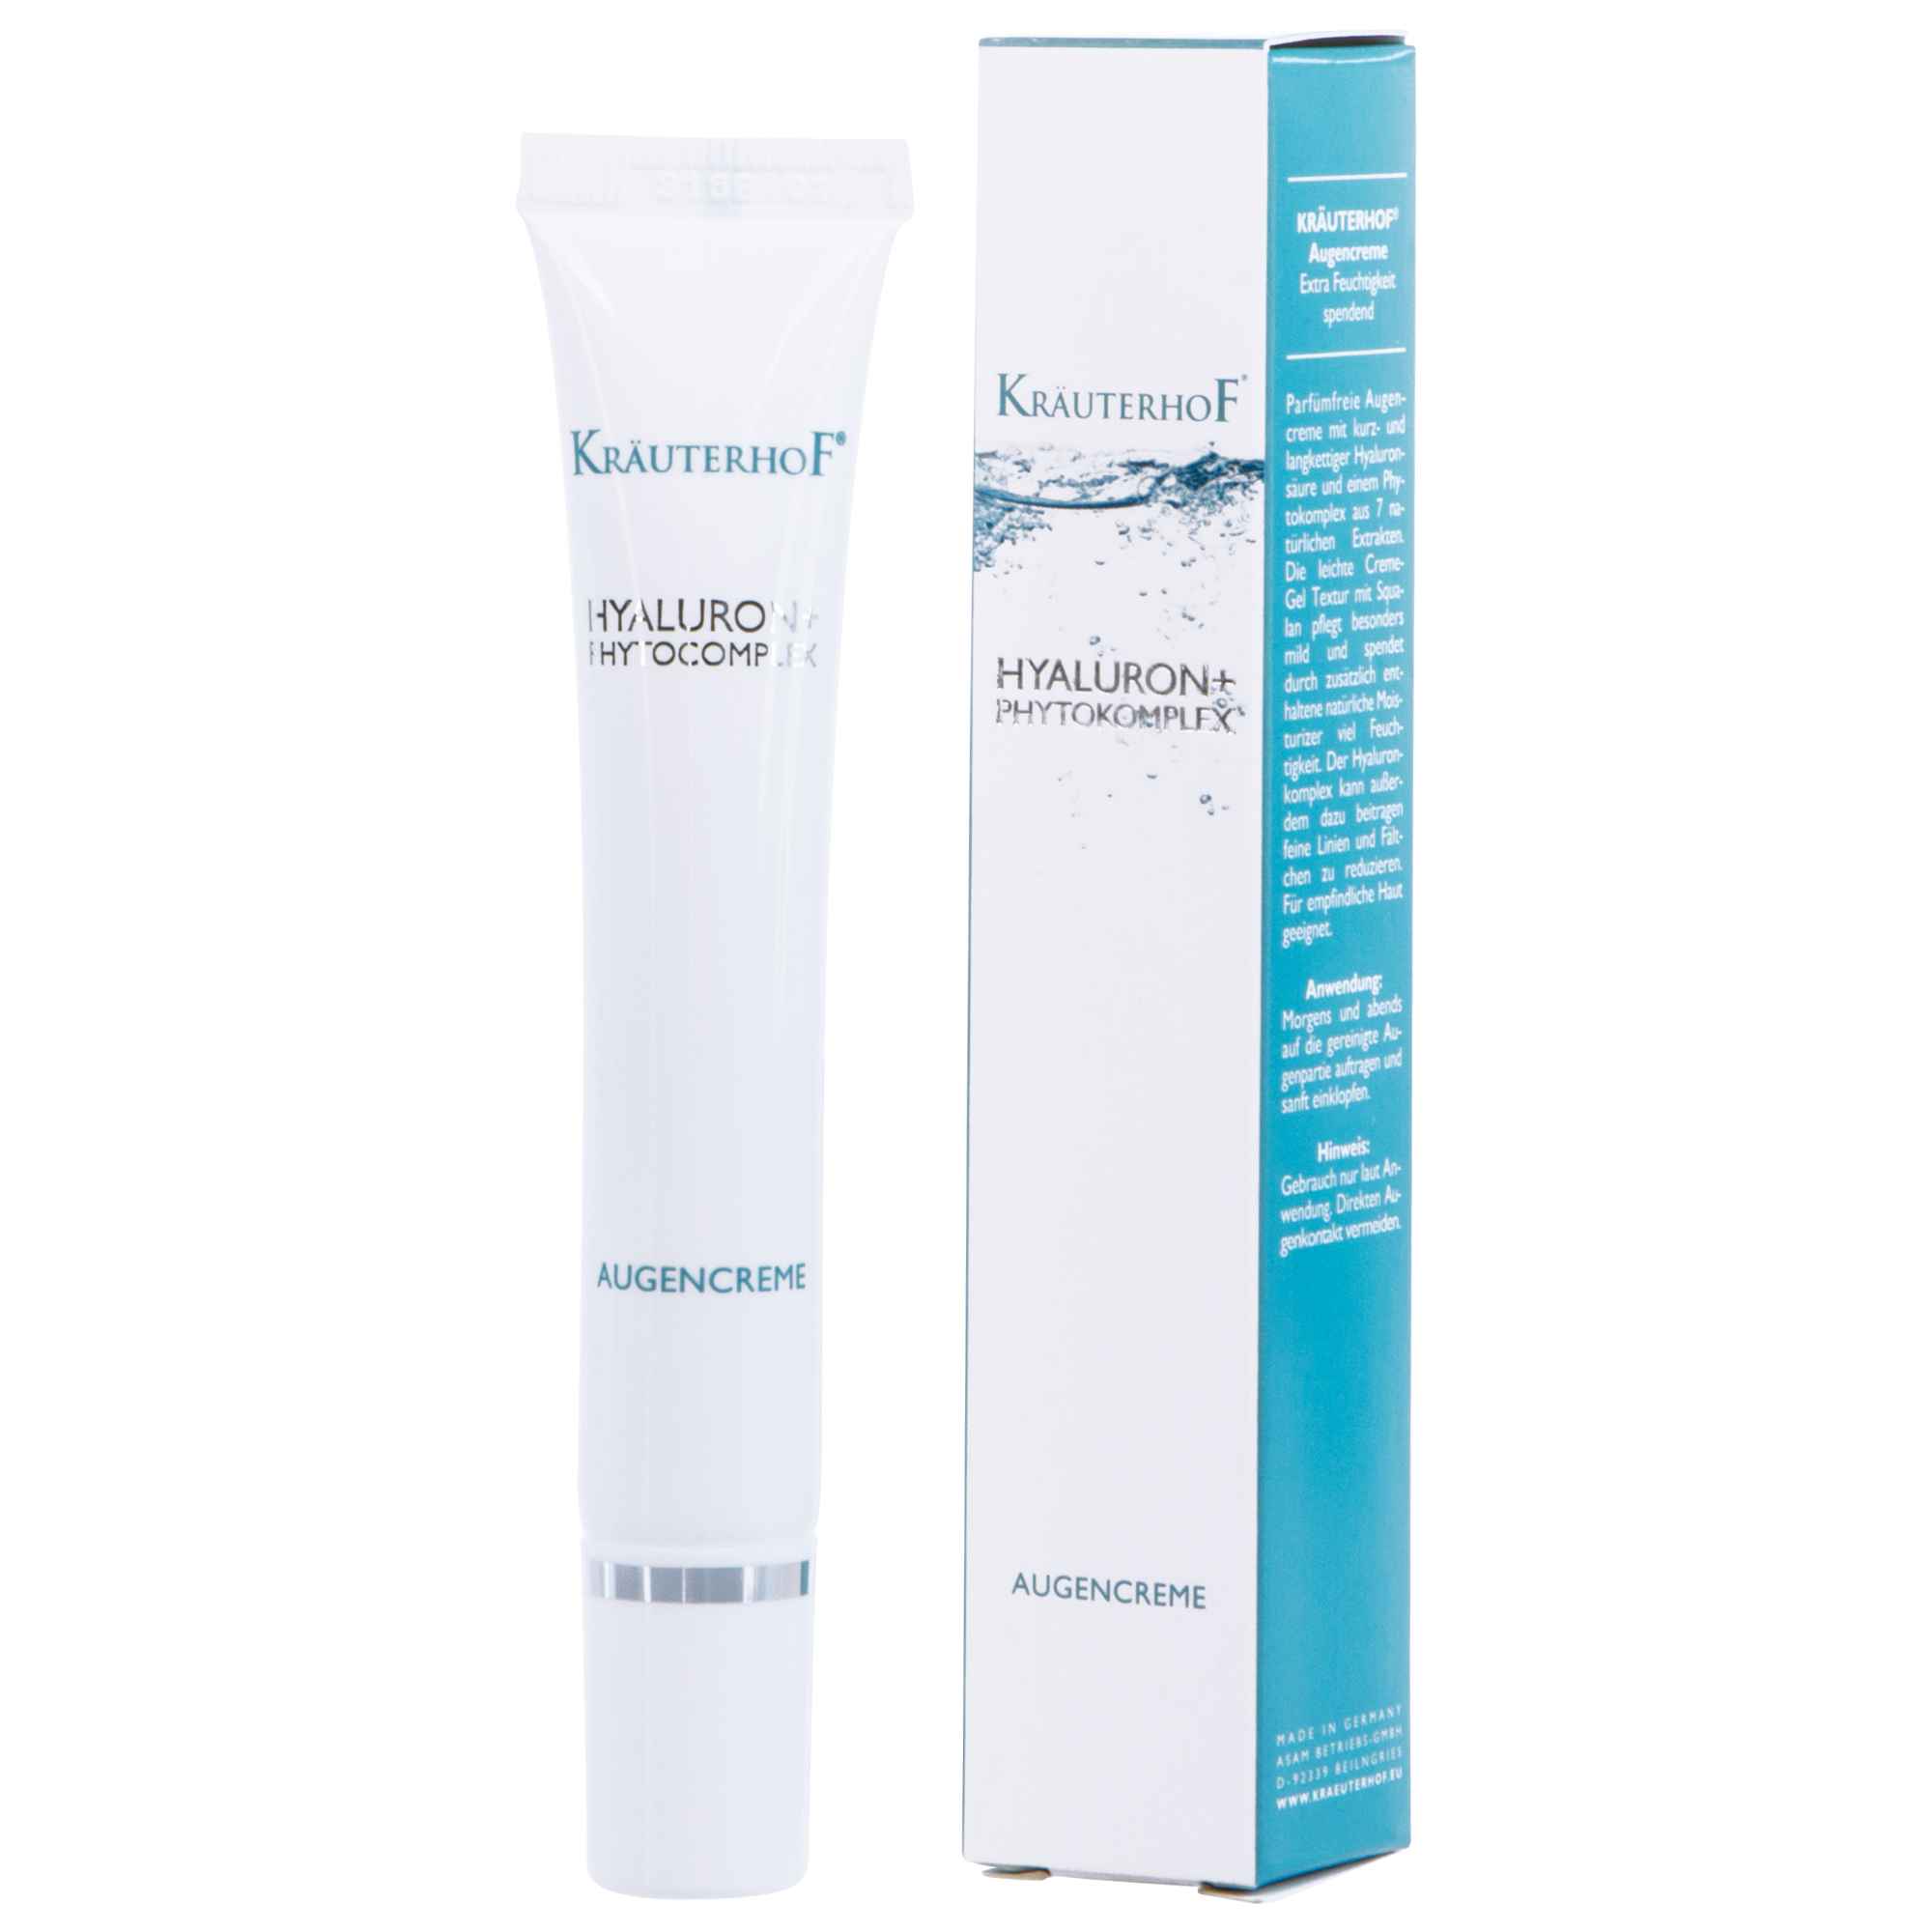 Kräuterhof® Face HYALURON+ PHYTOCOMPLEX Augencreme 20 ml